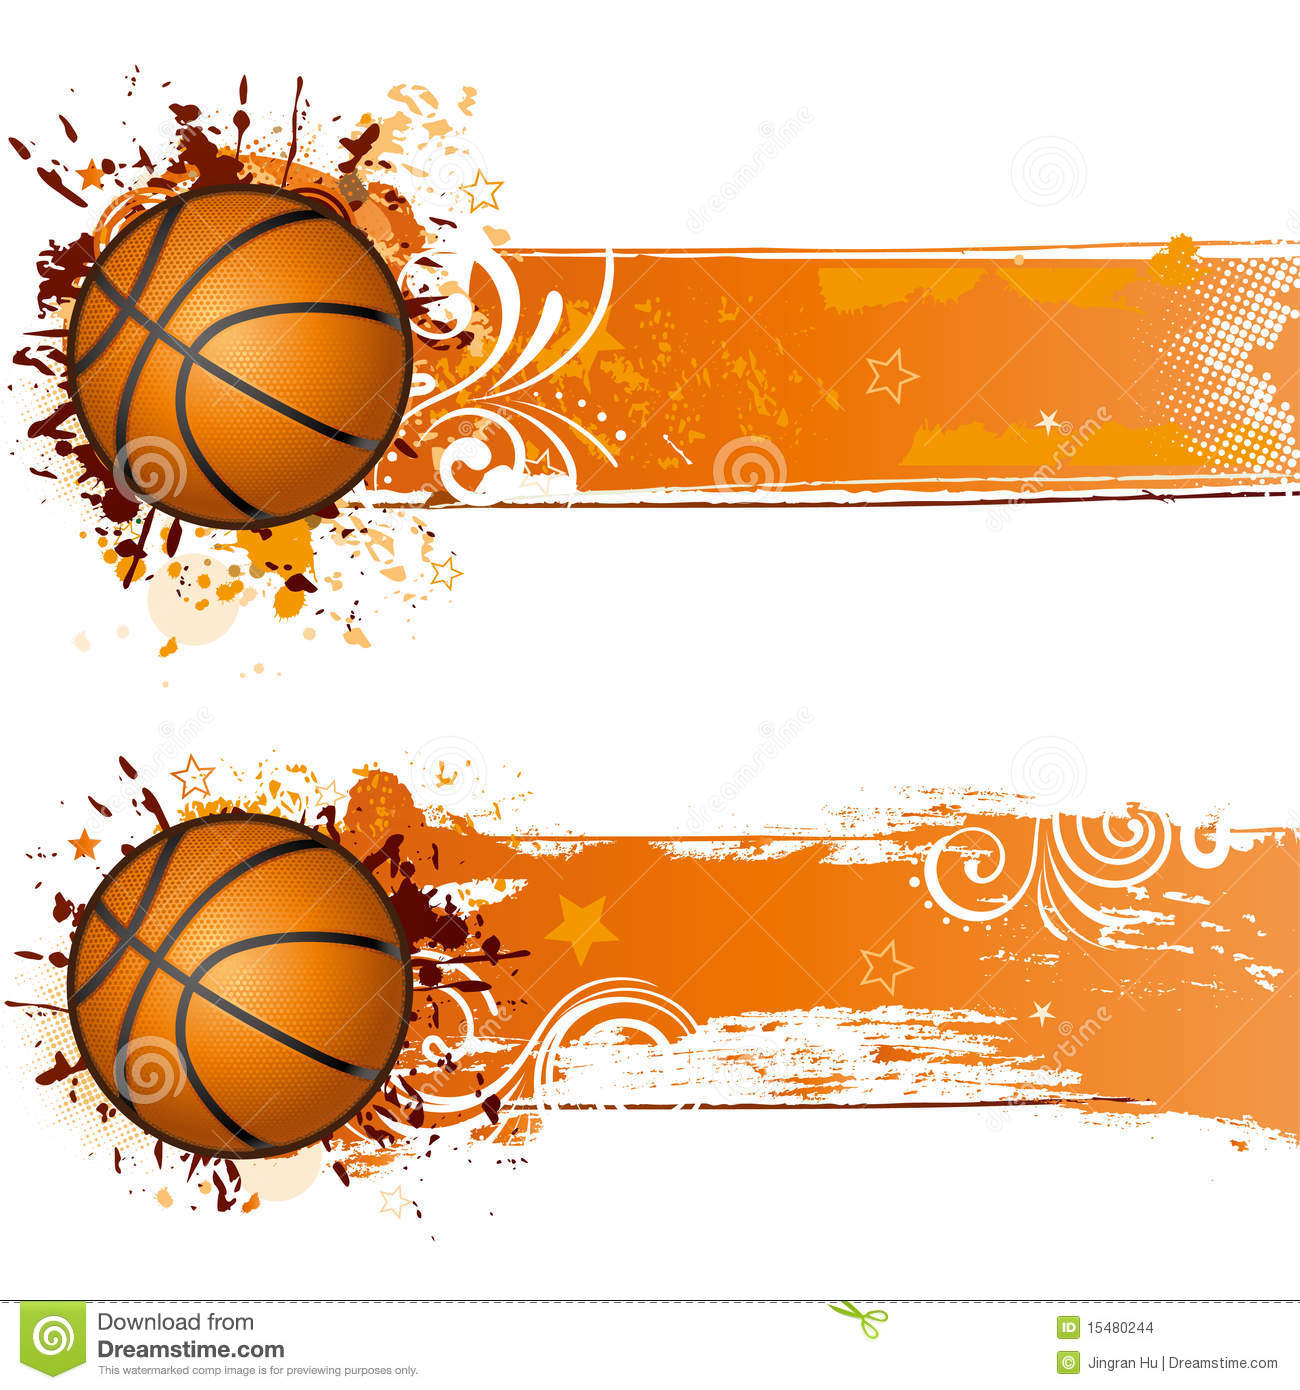 Basketball Clip Art Borders